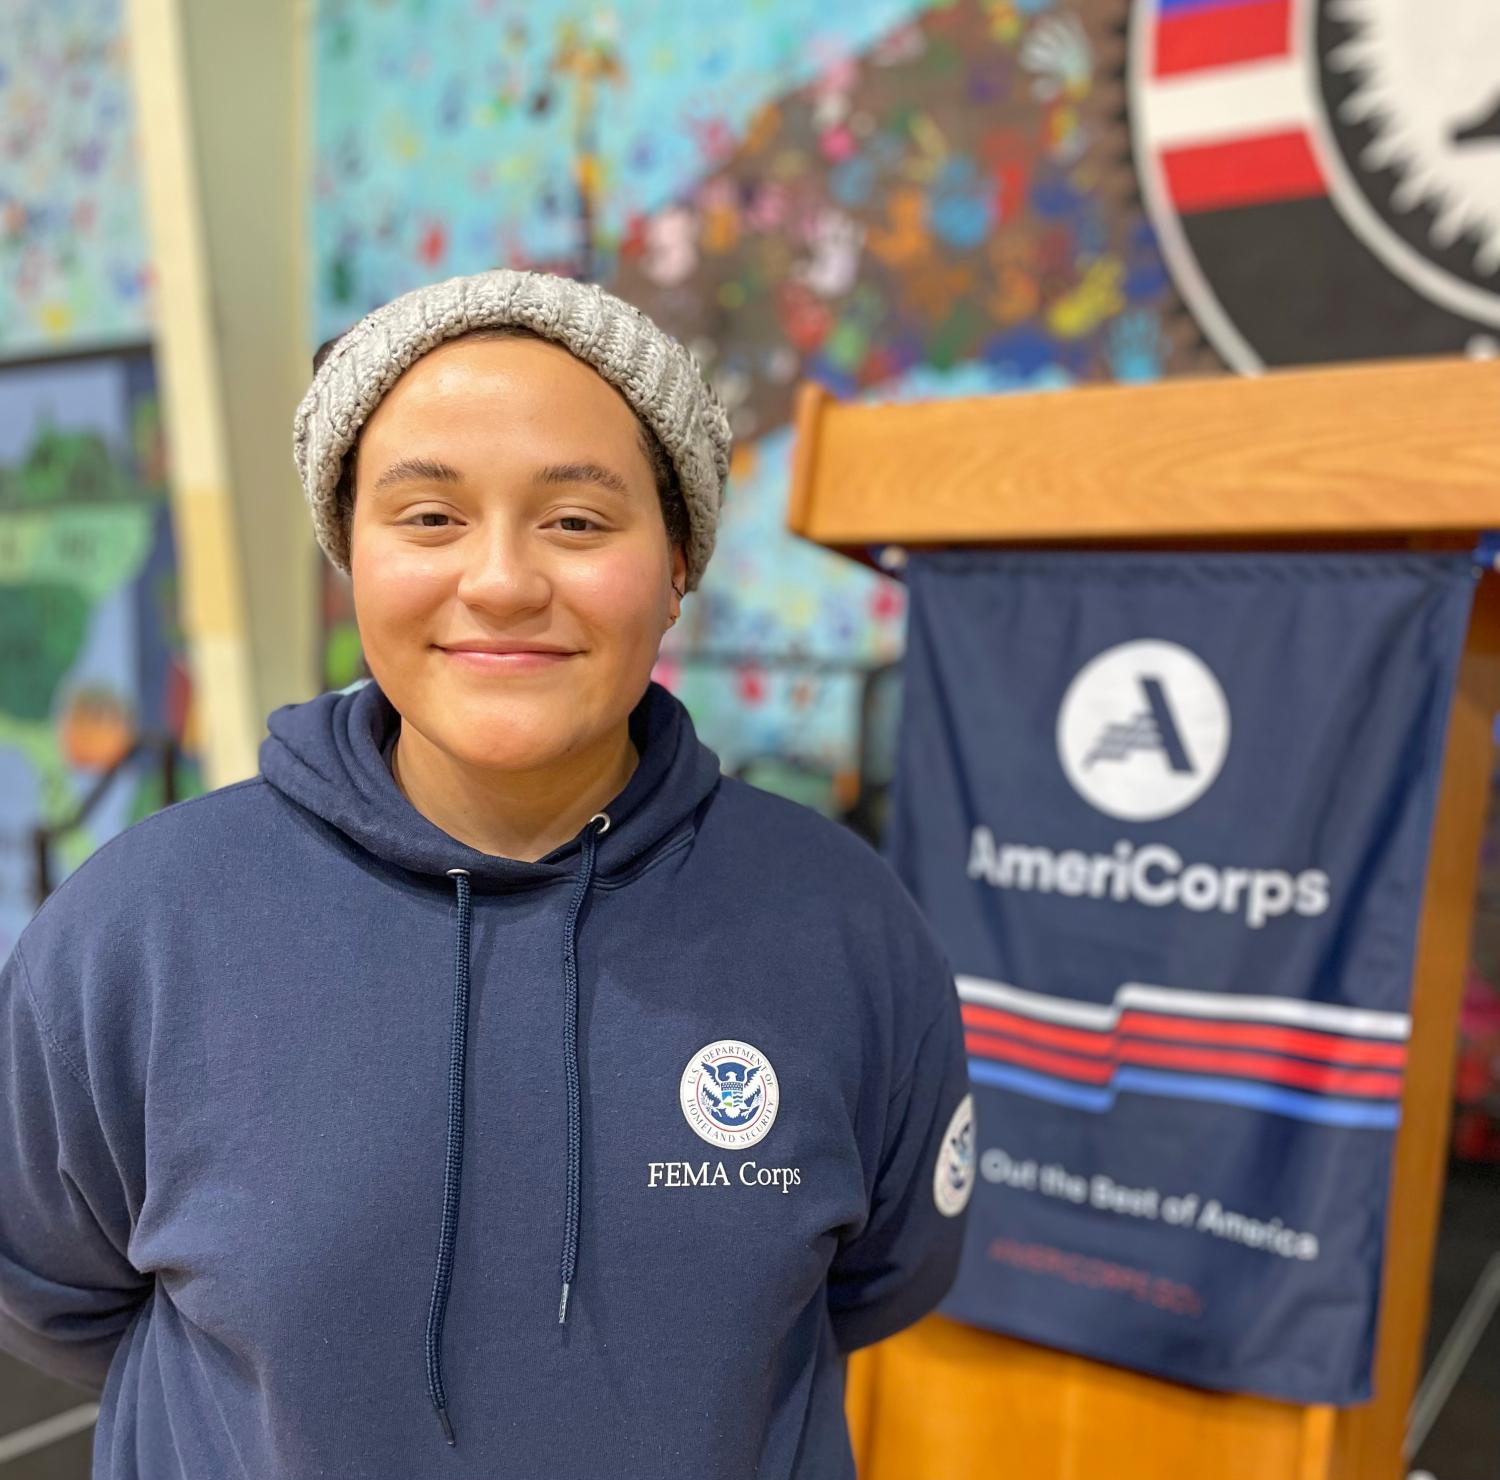 AmeriCorps NCCC FEMA Corps member, Kayla Lee